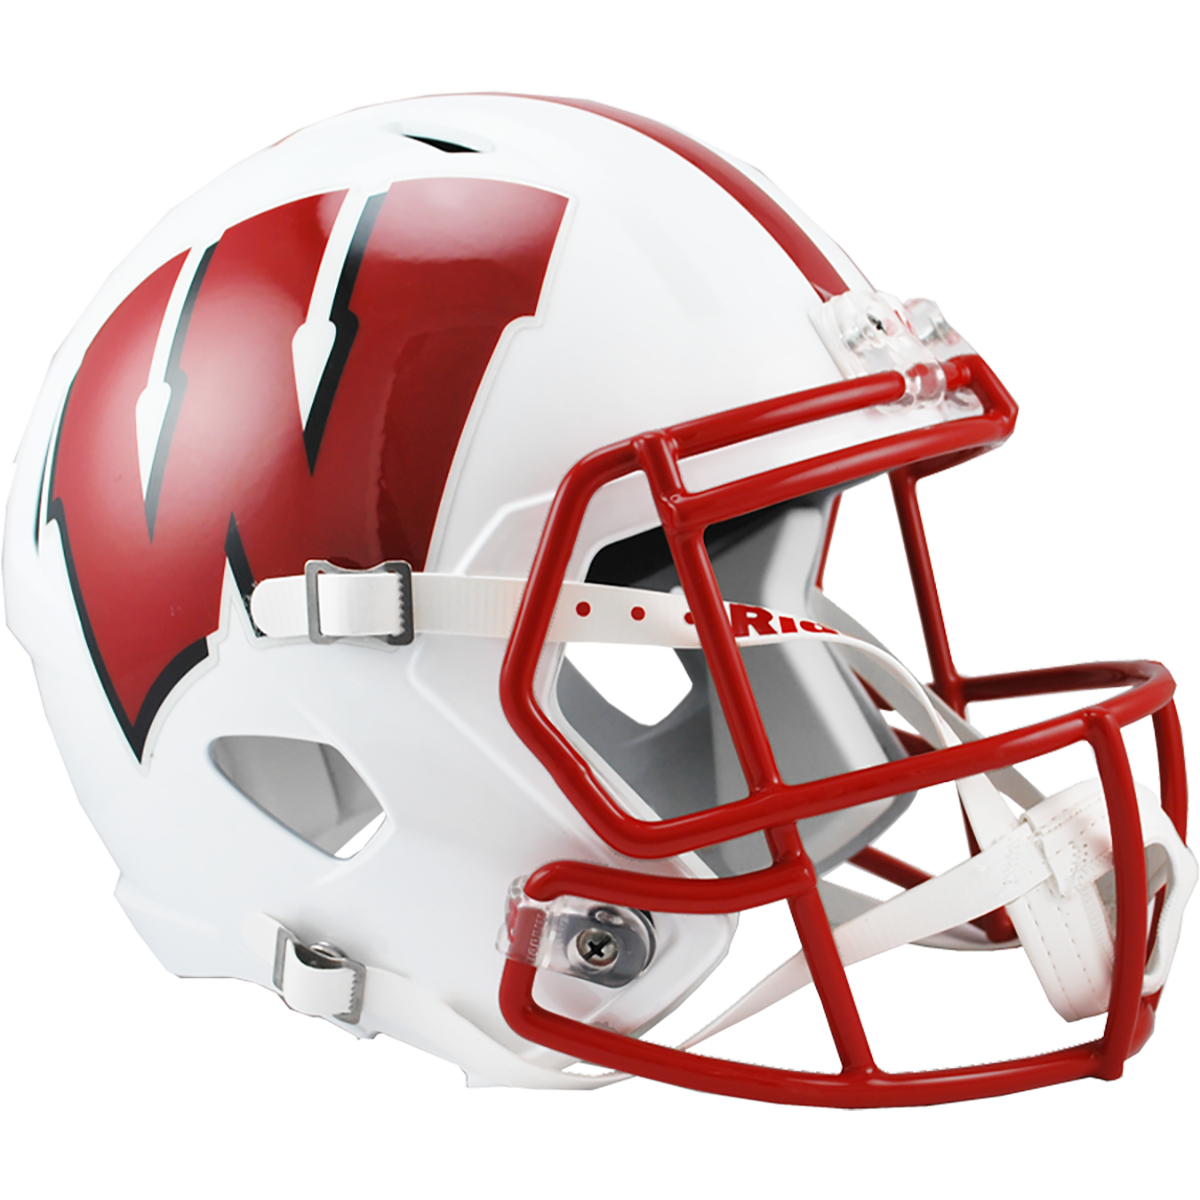 Wisconsin Badgers Riddell Replica Full Size Speed Helmet